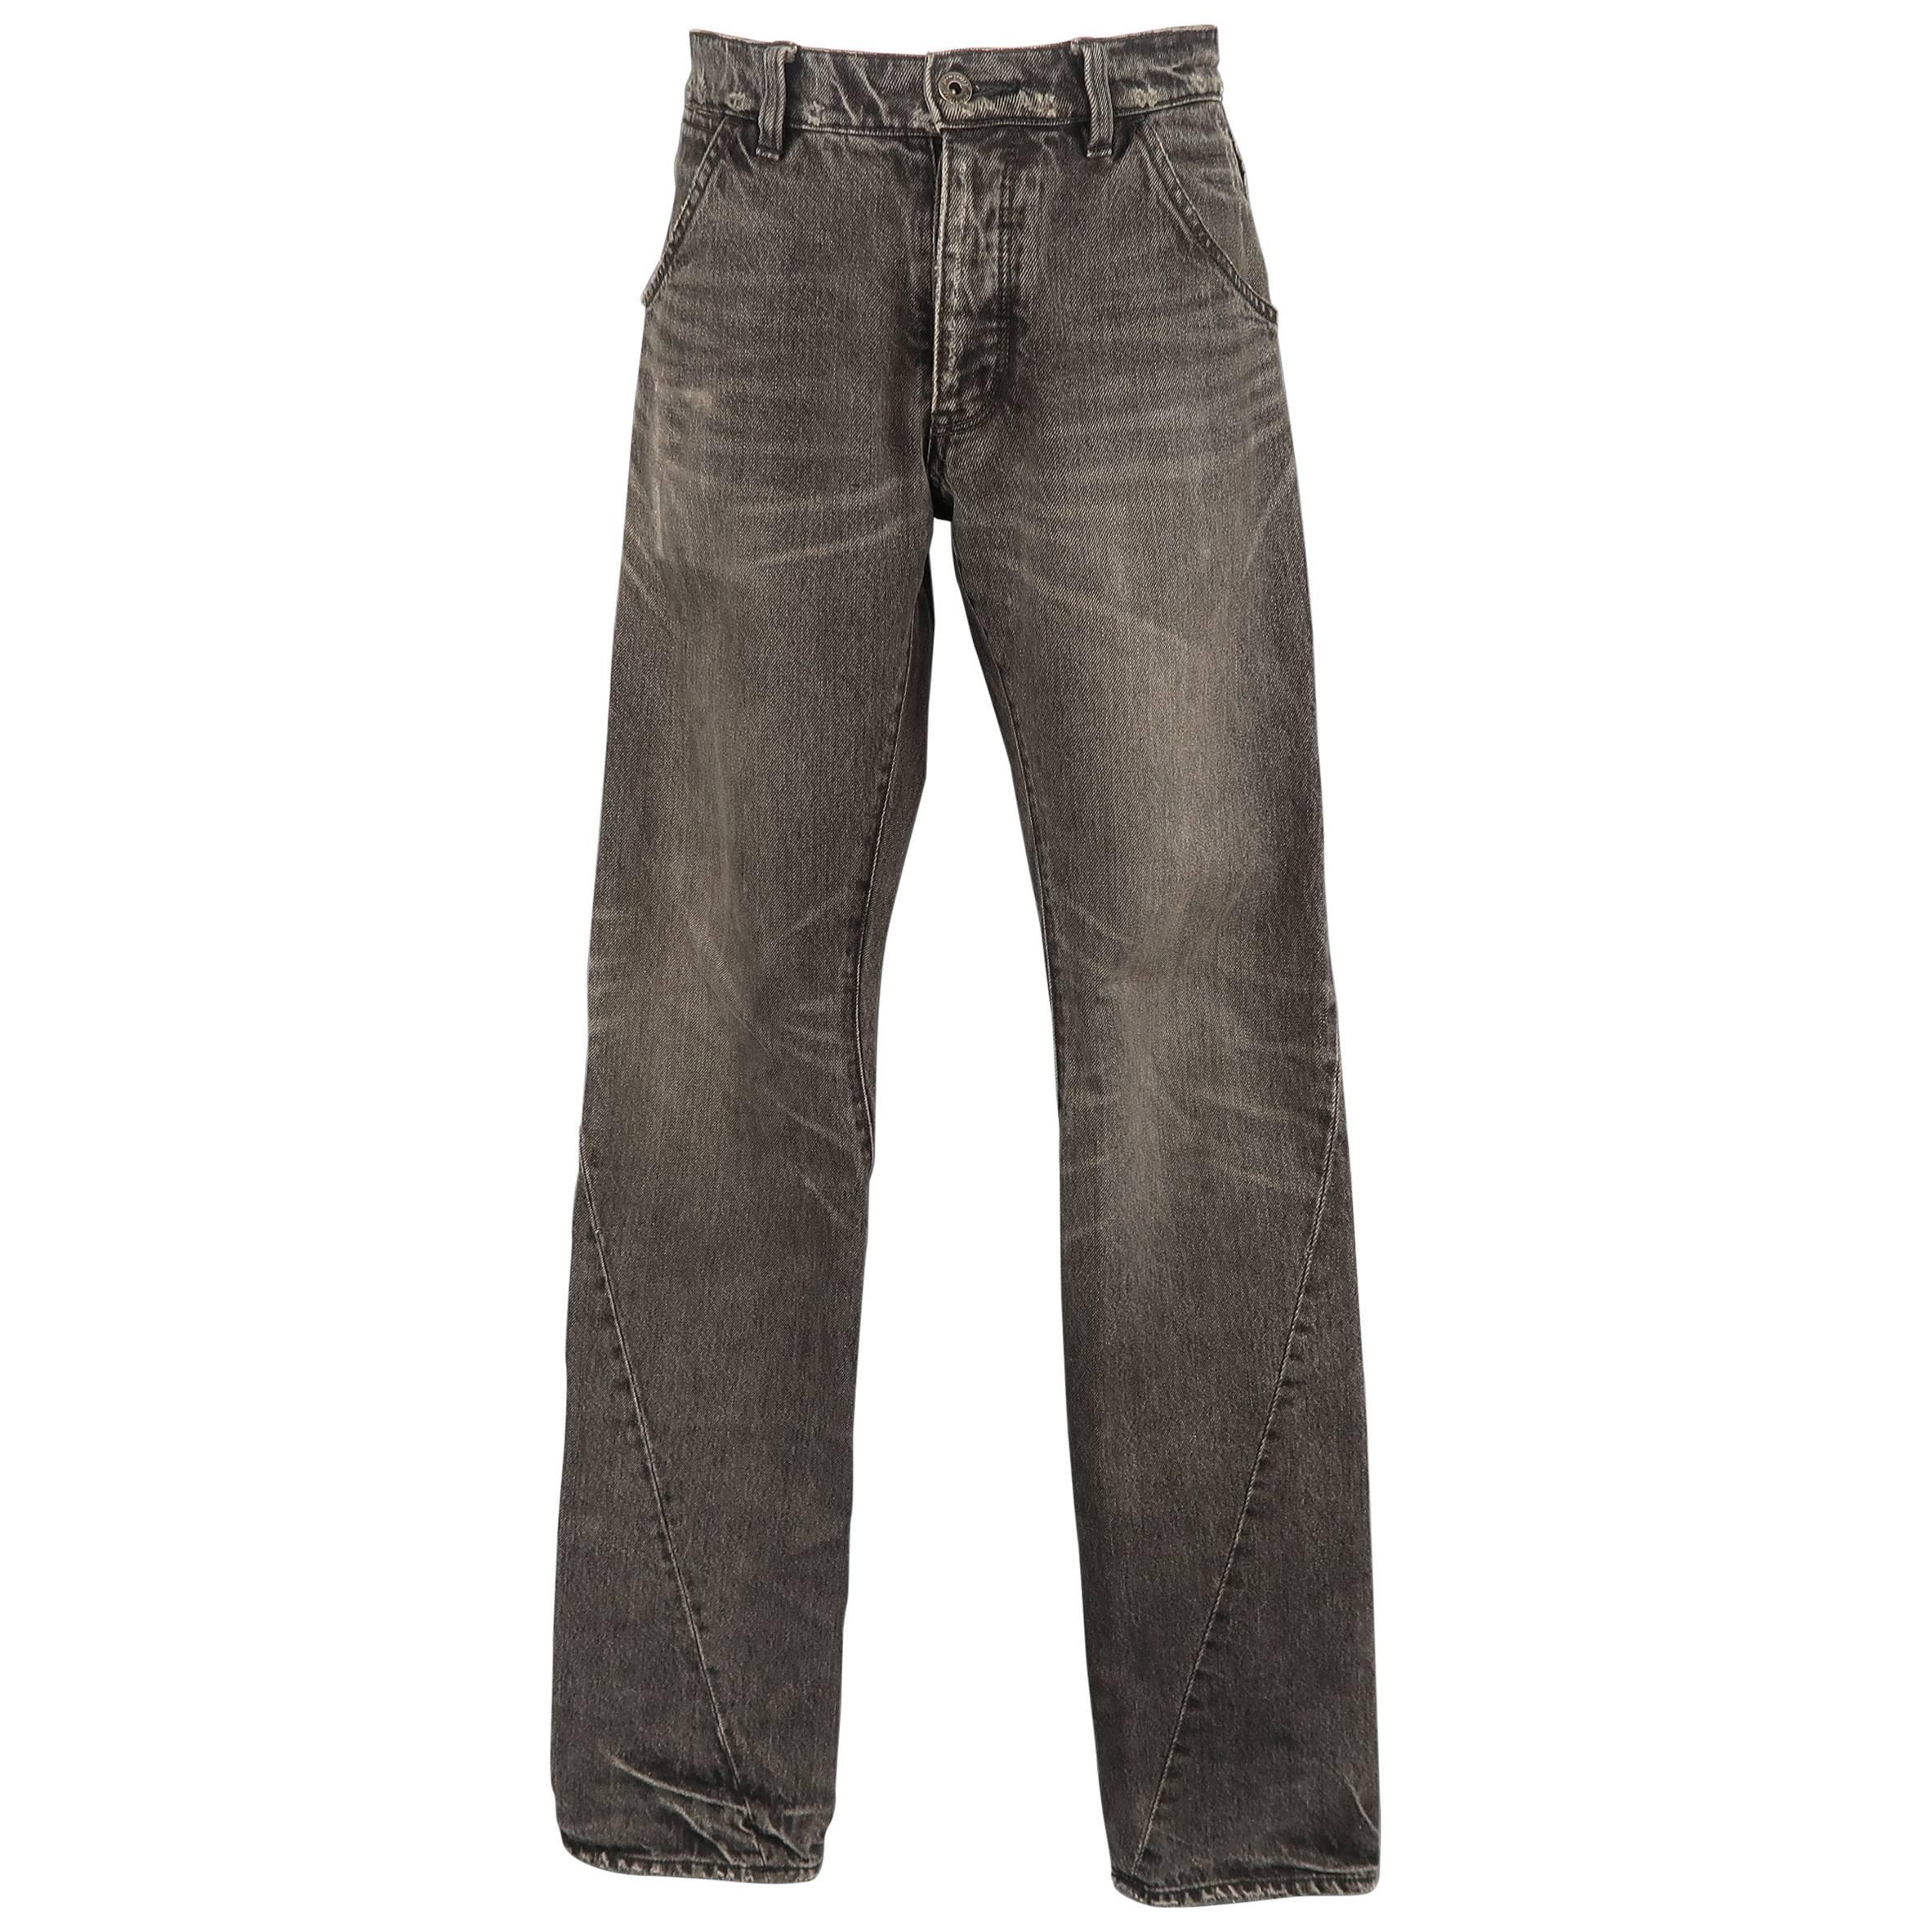 Men's ATTACHMENT Size 32 Charcoal Distressed Washed Denim Diagonal Seam Jeans